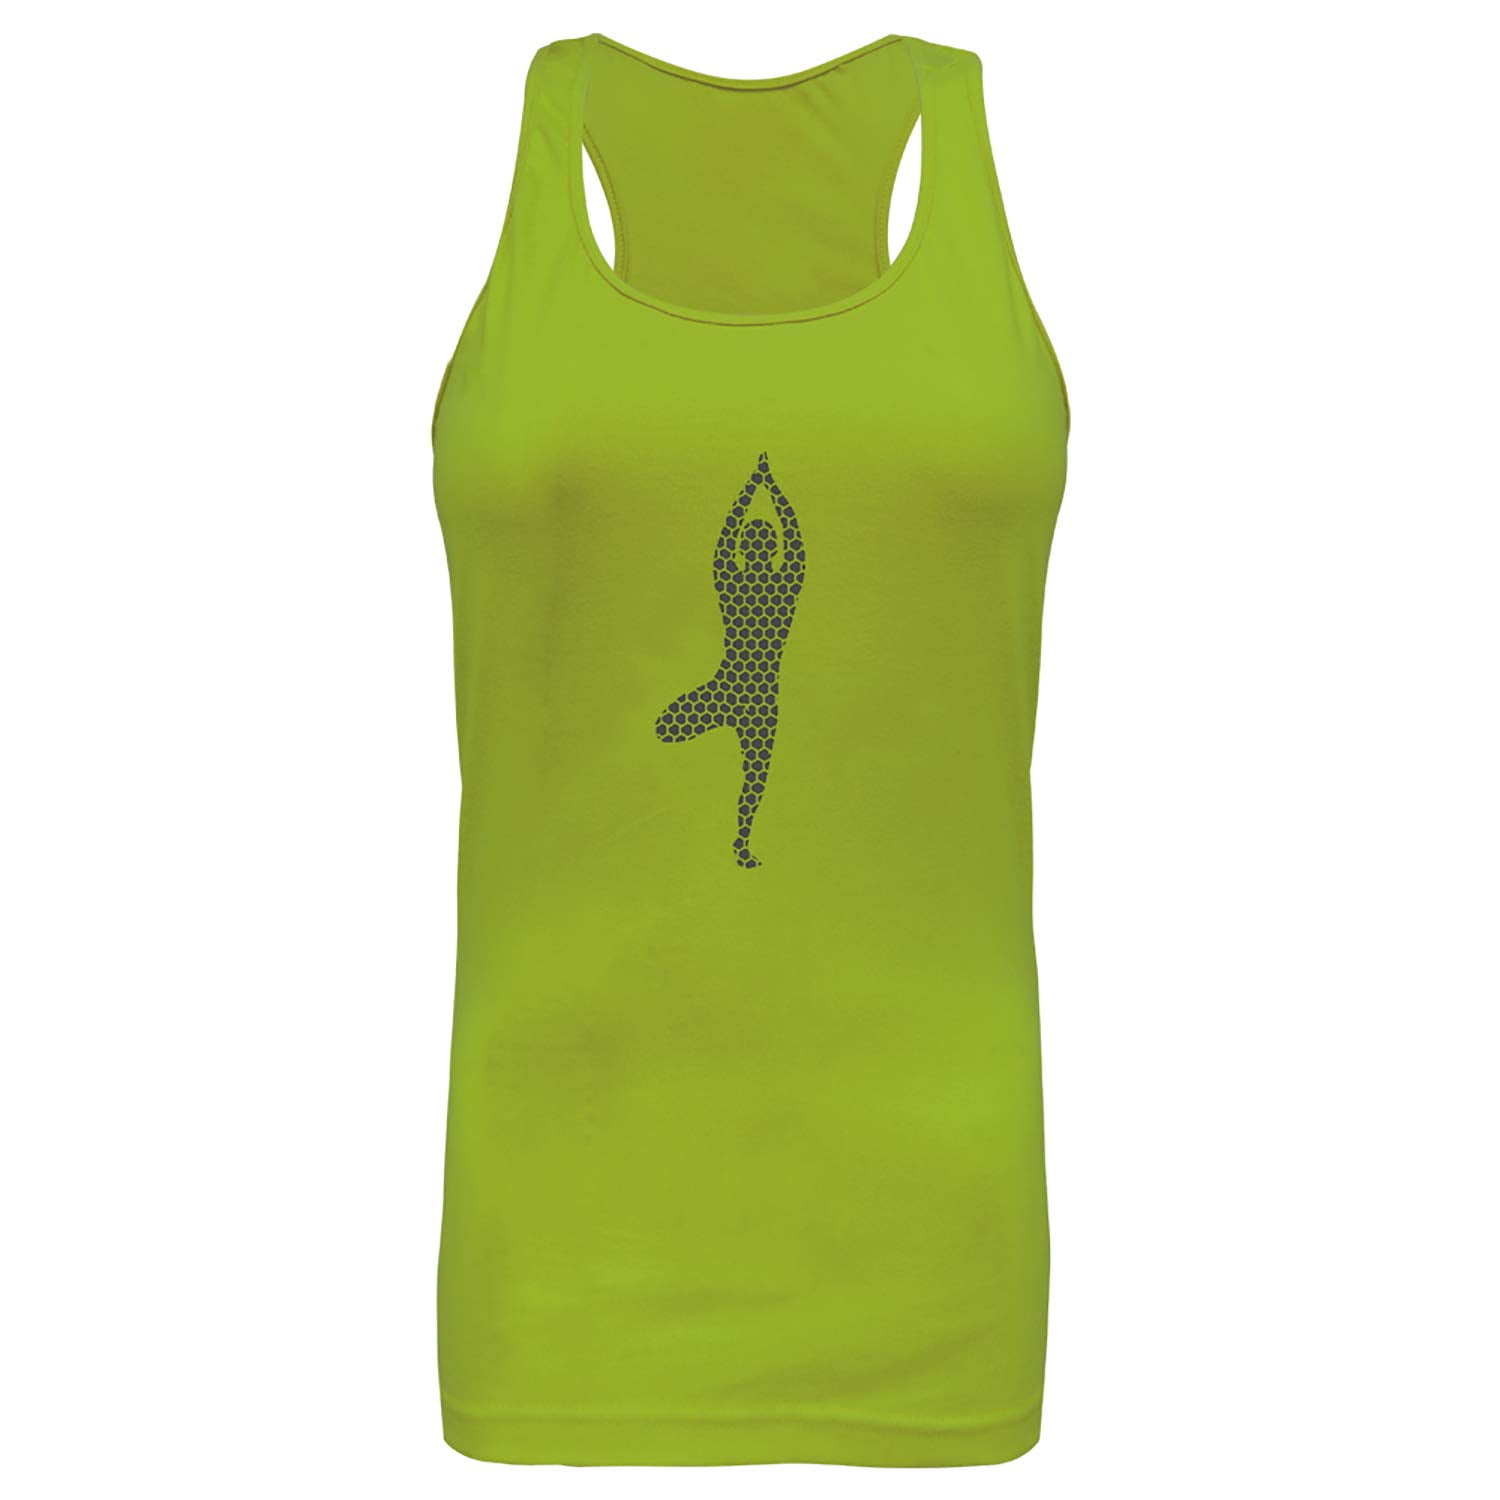 G4 Vision Yoga Shirt Meditation T Shirt, Relax Shirt for Women